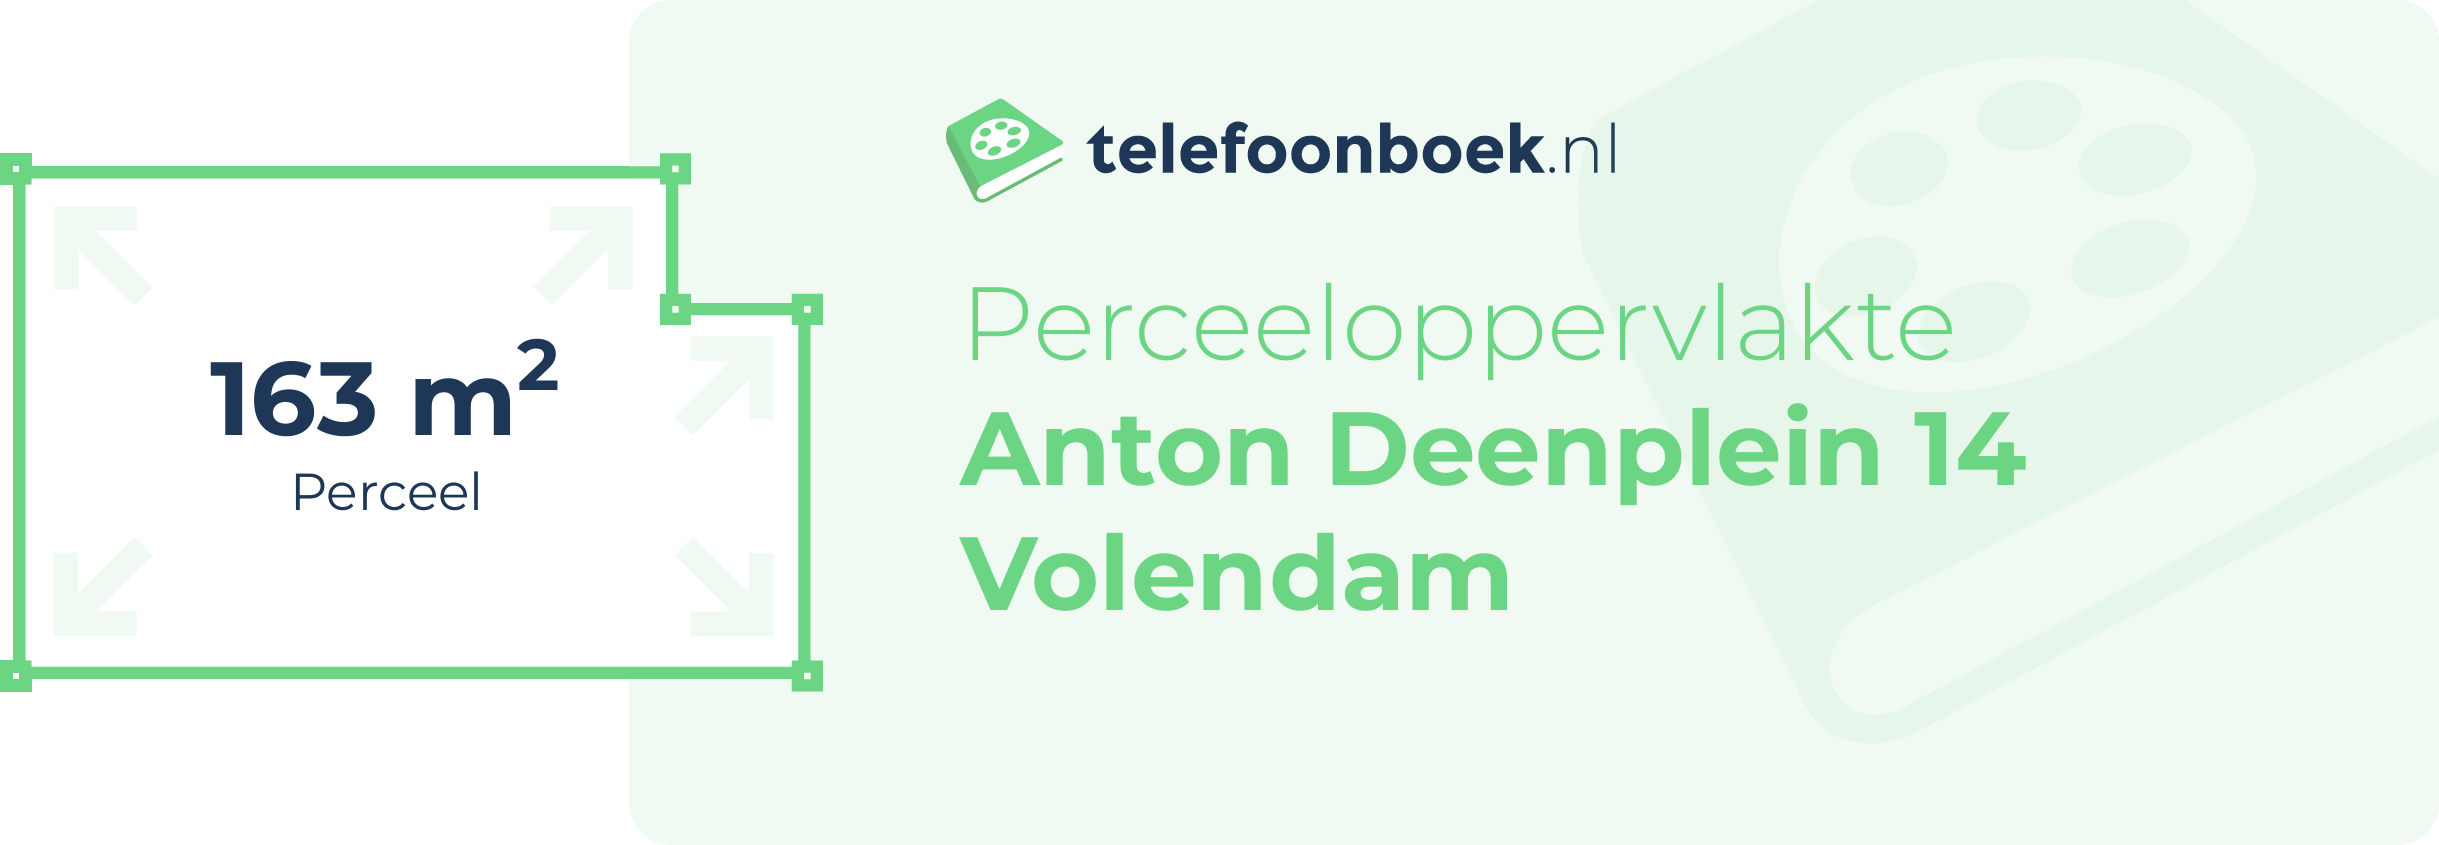 Perceeloppervlakte Anton Deenplein 14 Volendam